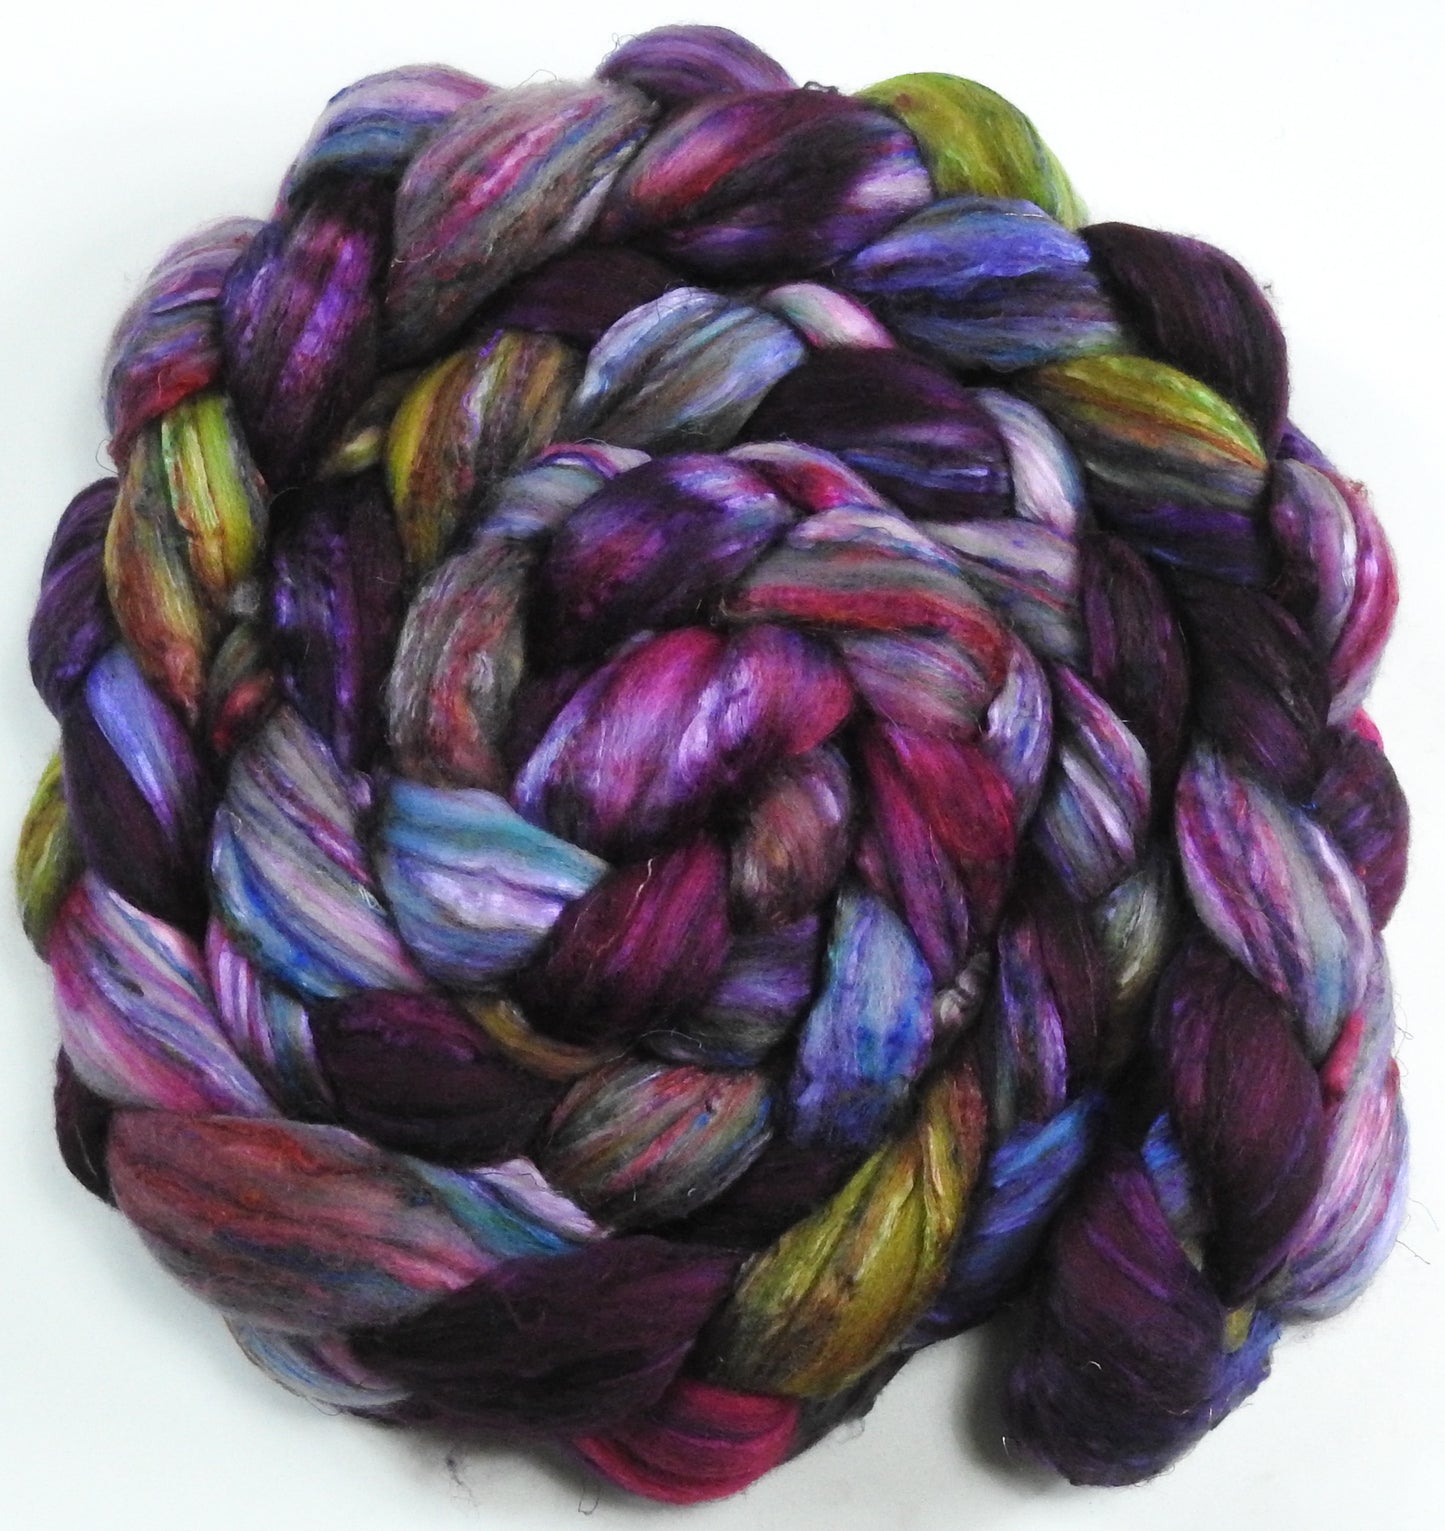 Parasol (5.8 oz) - Batt in a Braid #39 - Falkland Merino/ Mulberry Silk / Sari Silk (50/25/25)